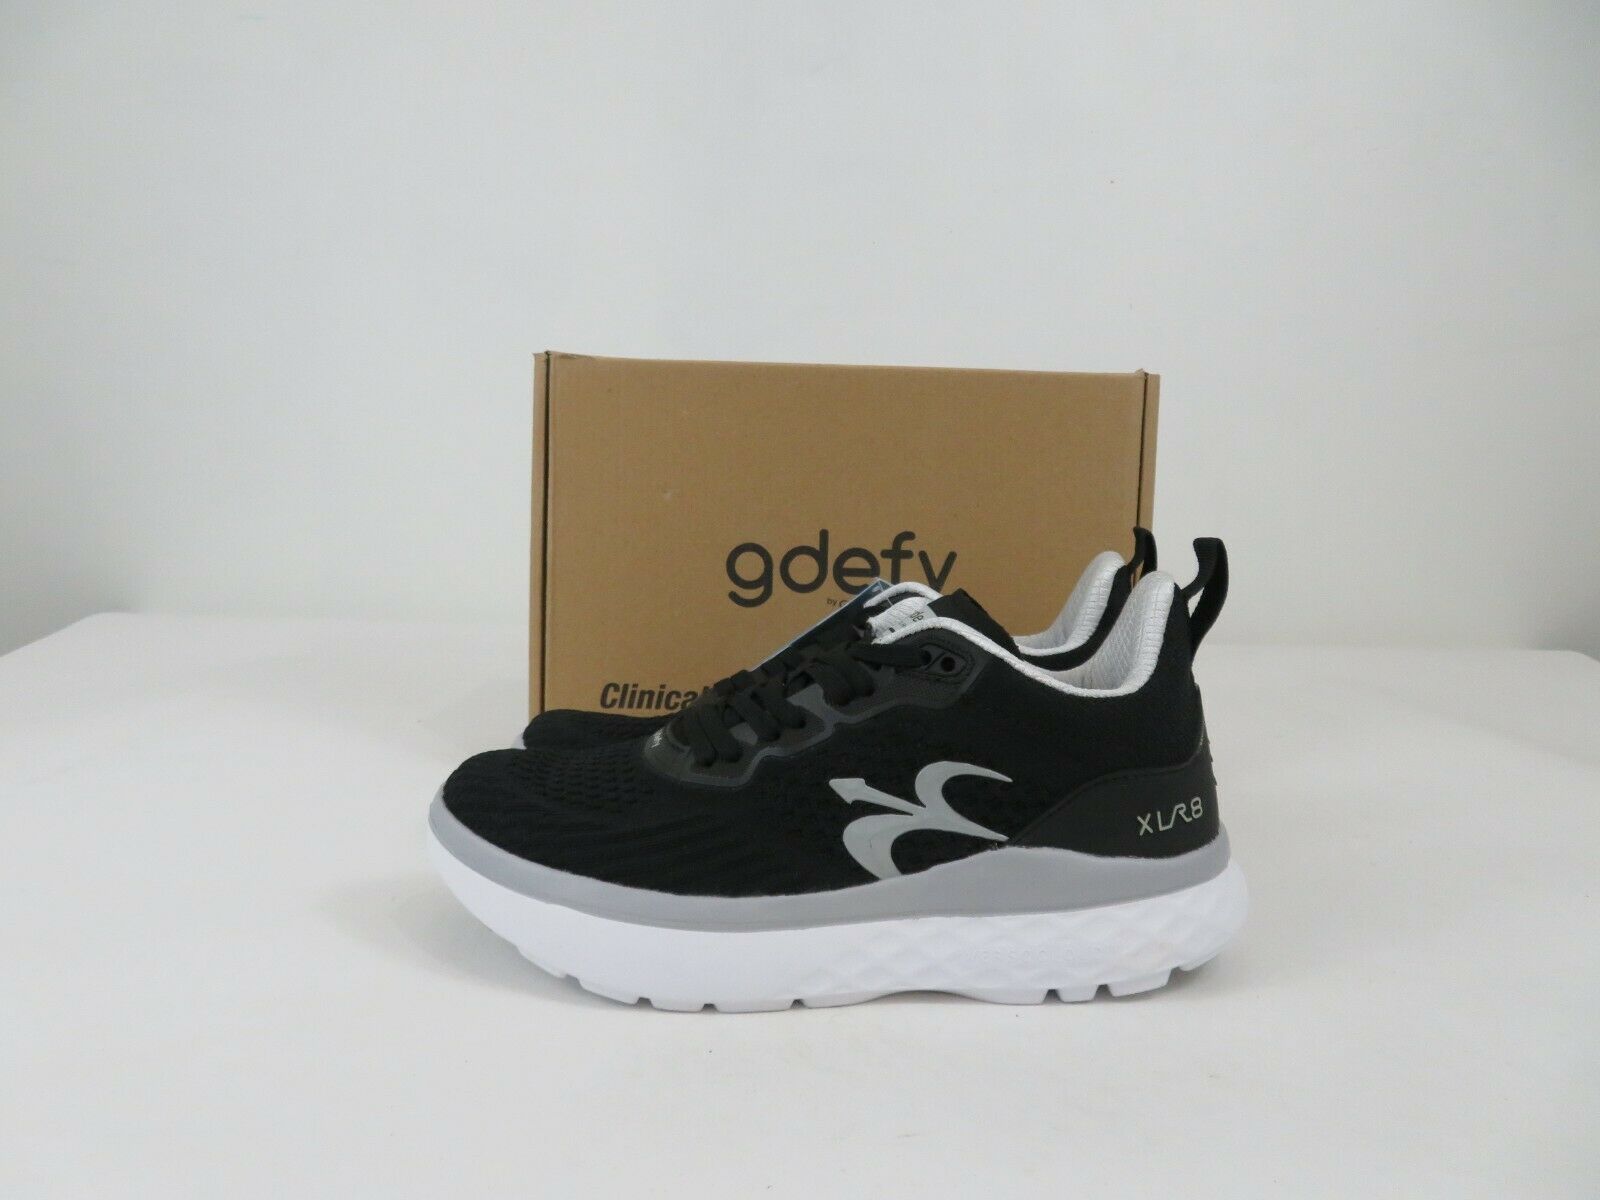 Gravity Defyer XLR8 Run Walking Running Athletic Shoes Black Silver Mens Sz 8.5